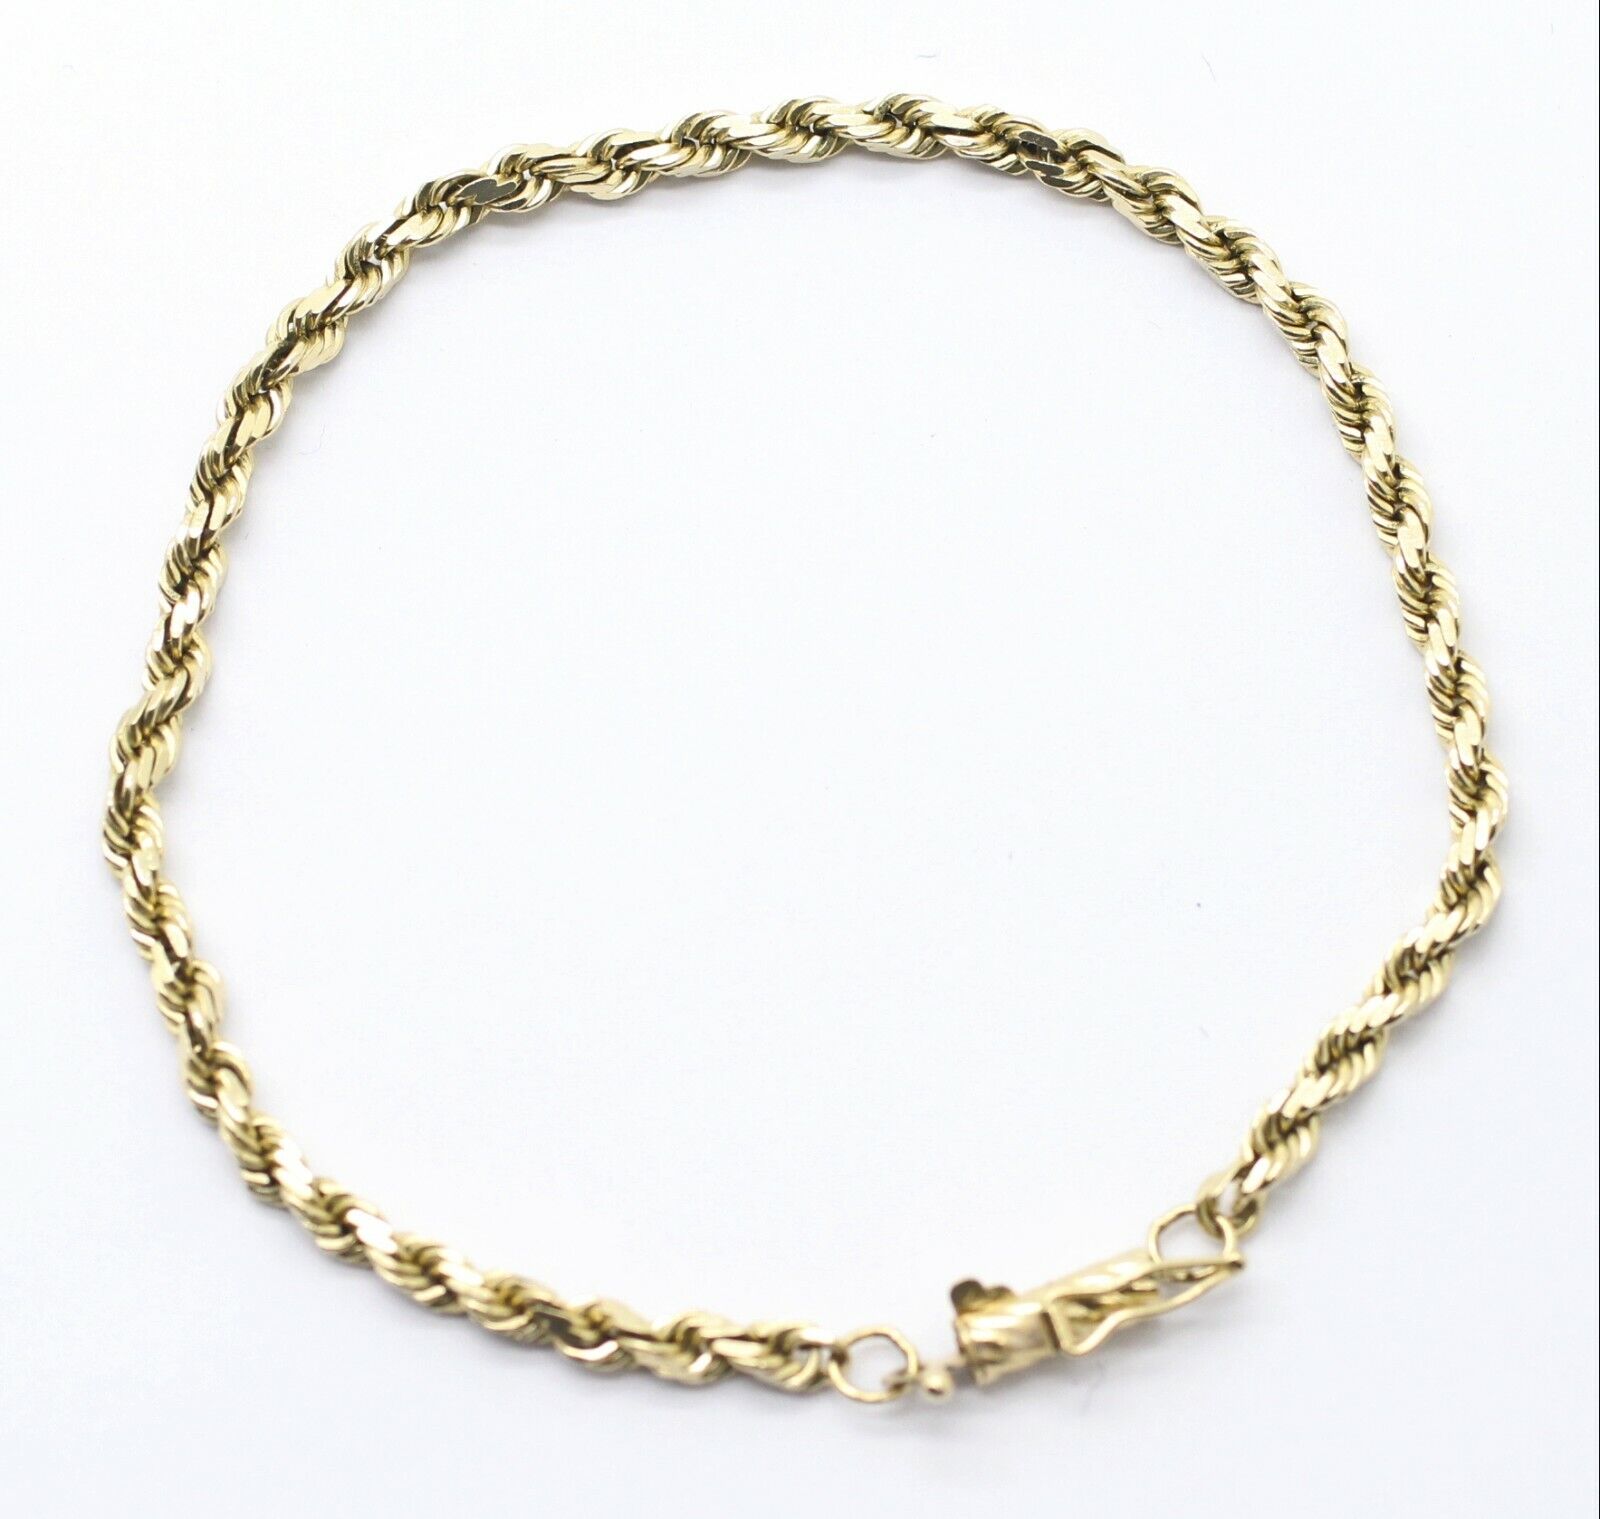 Women's Rope Chain Bracelet in 14kt Yellow Gold 5.50grs